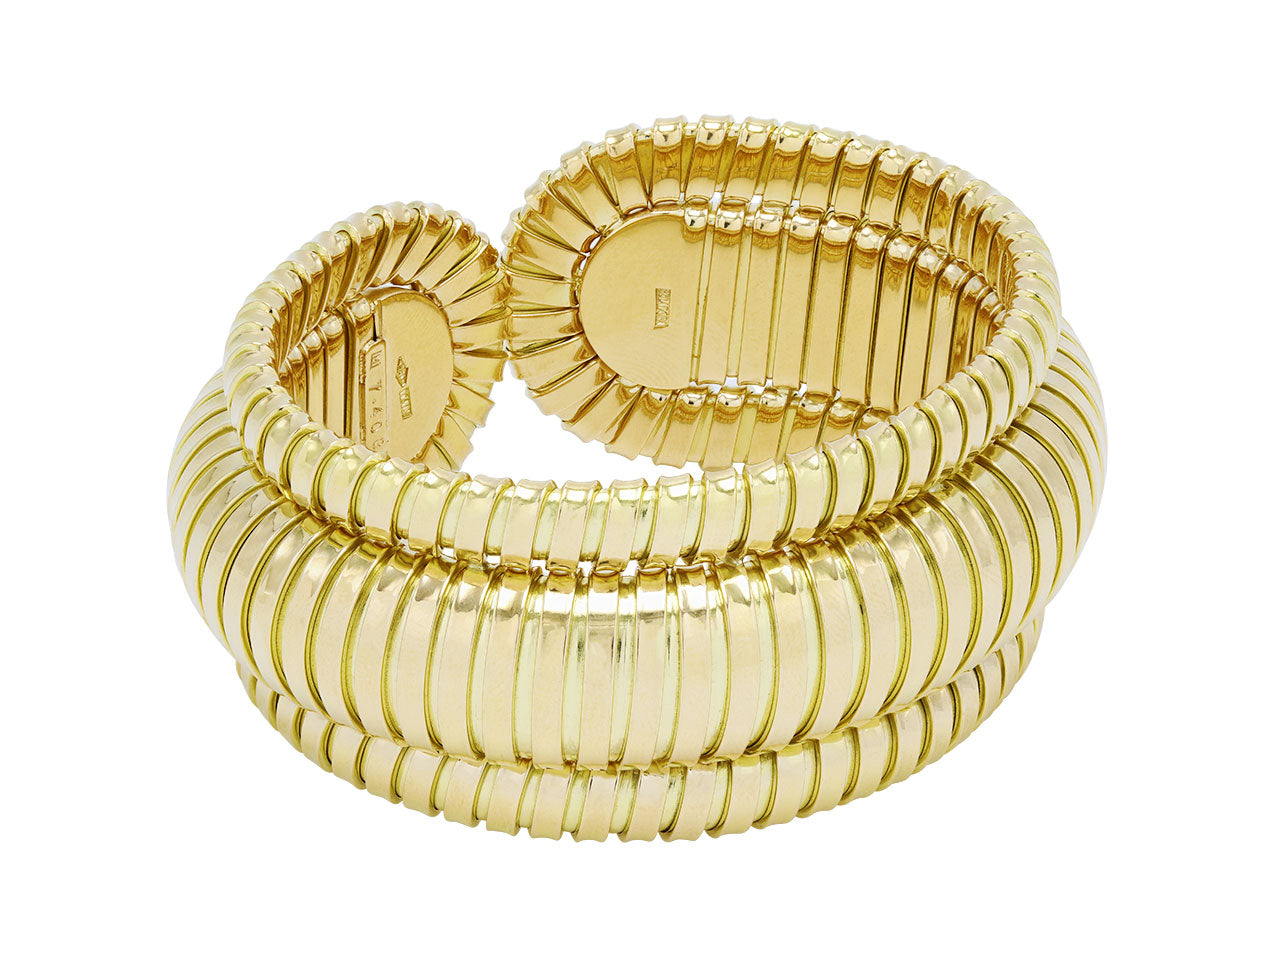 Bordered Domed Cuff Bracelet in 18K Gold, by Beladora